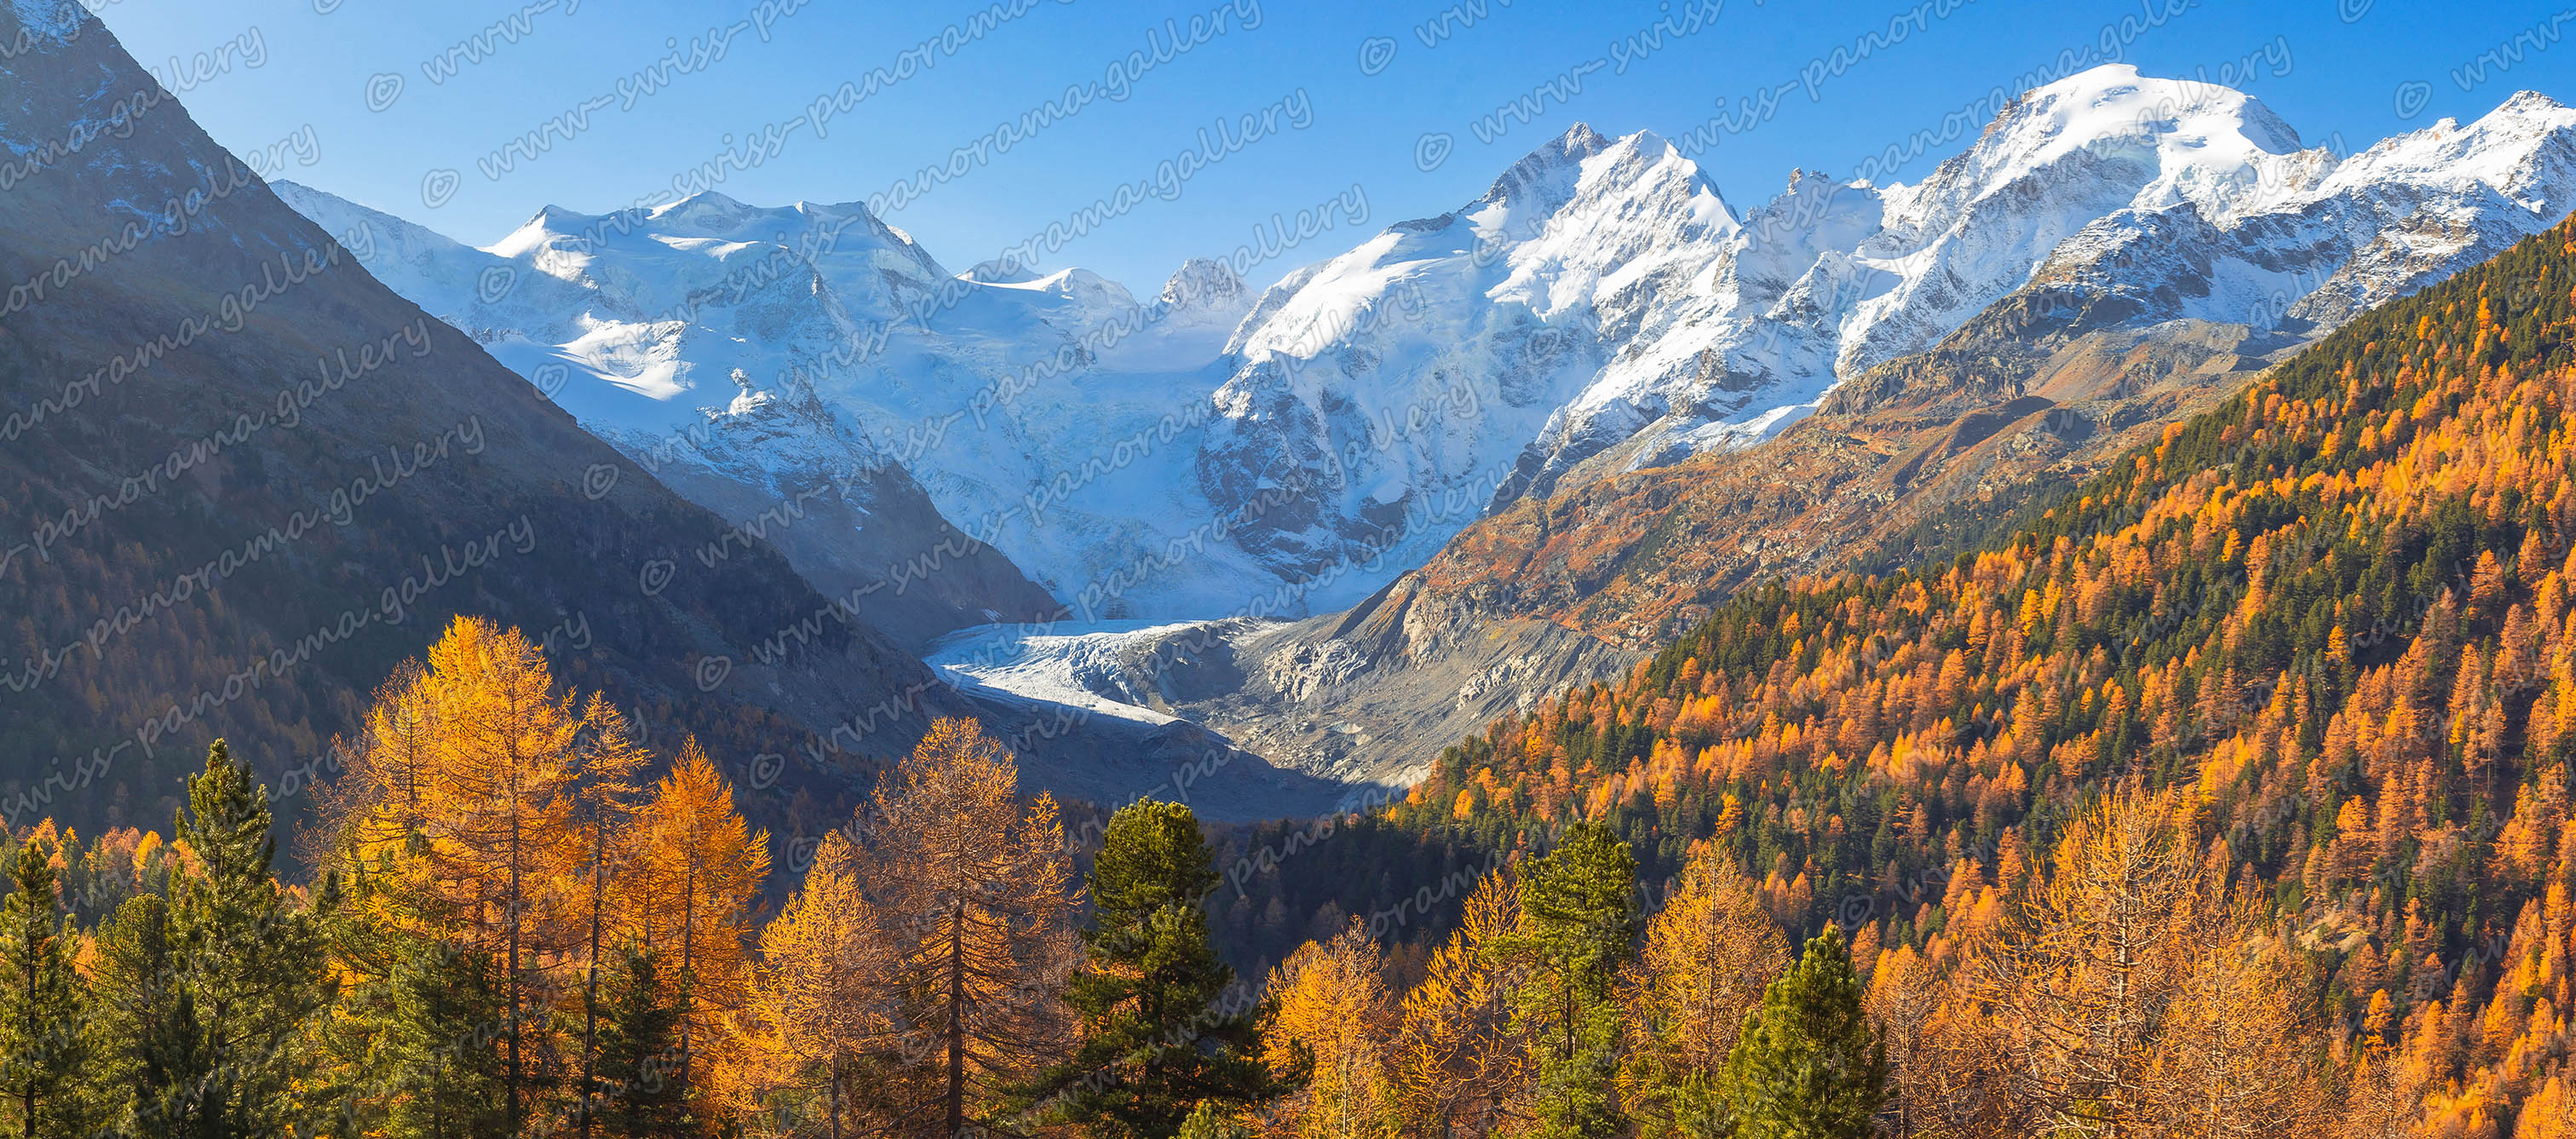 Switzerland panorama, Morteratsch, View from the Bernina pass road into the Morteratsch valley, swiss panorama.gallery